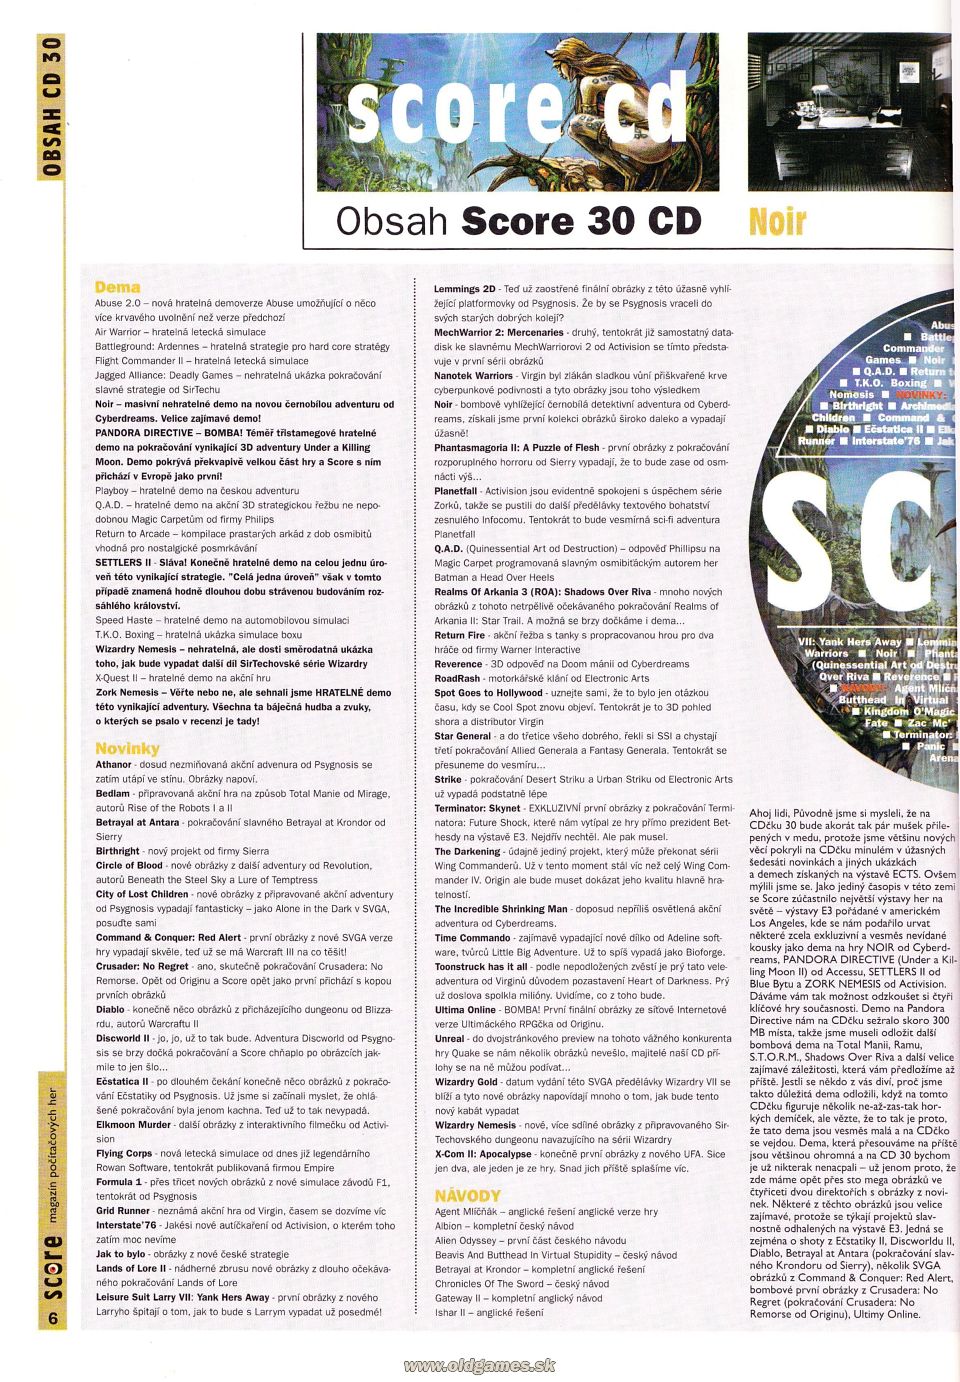 Obsah Score CD 30